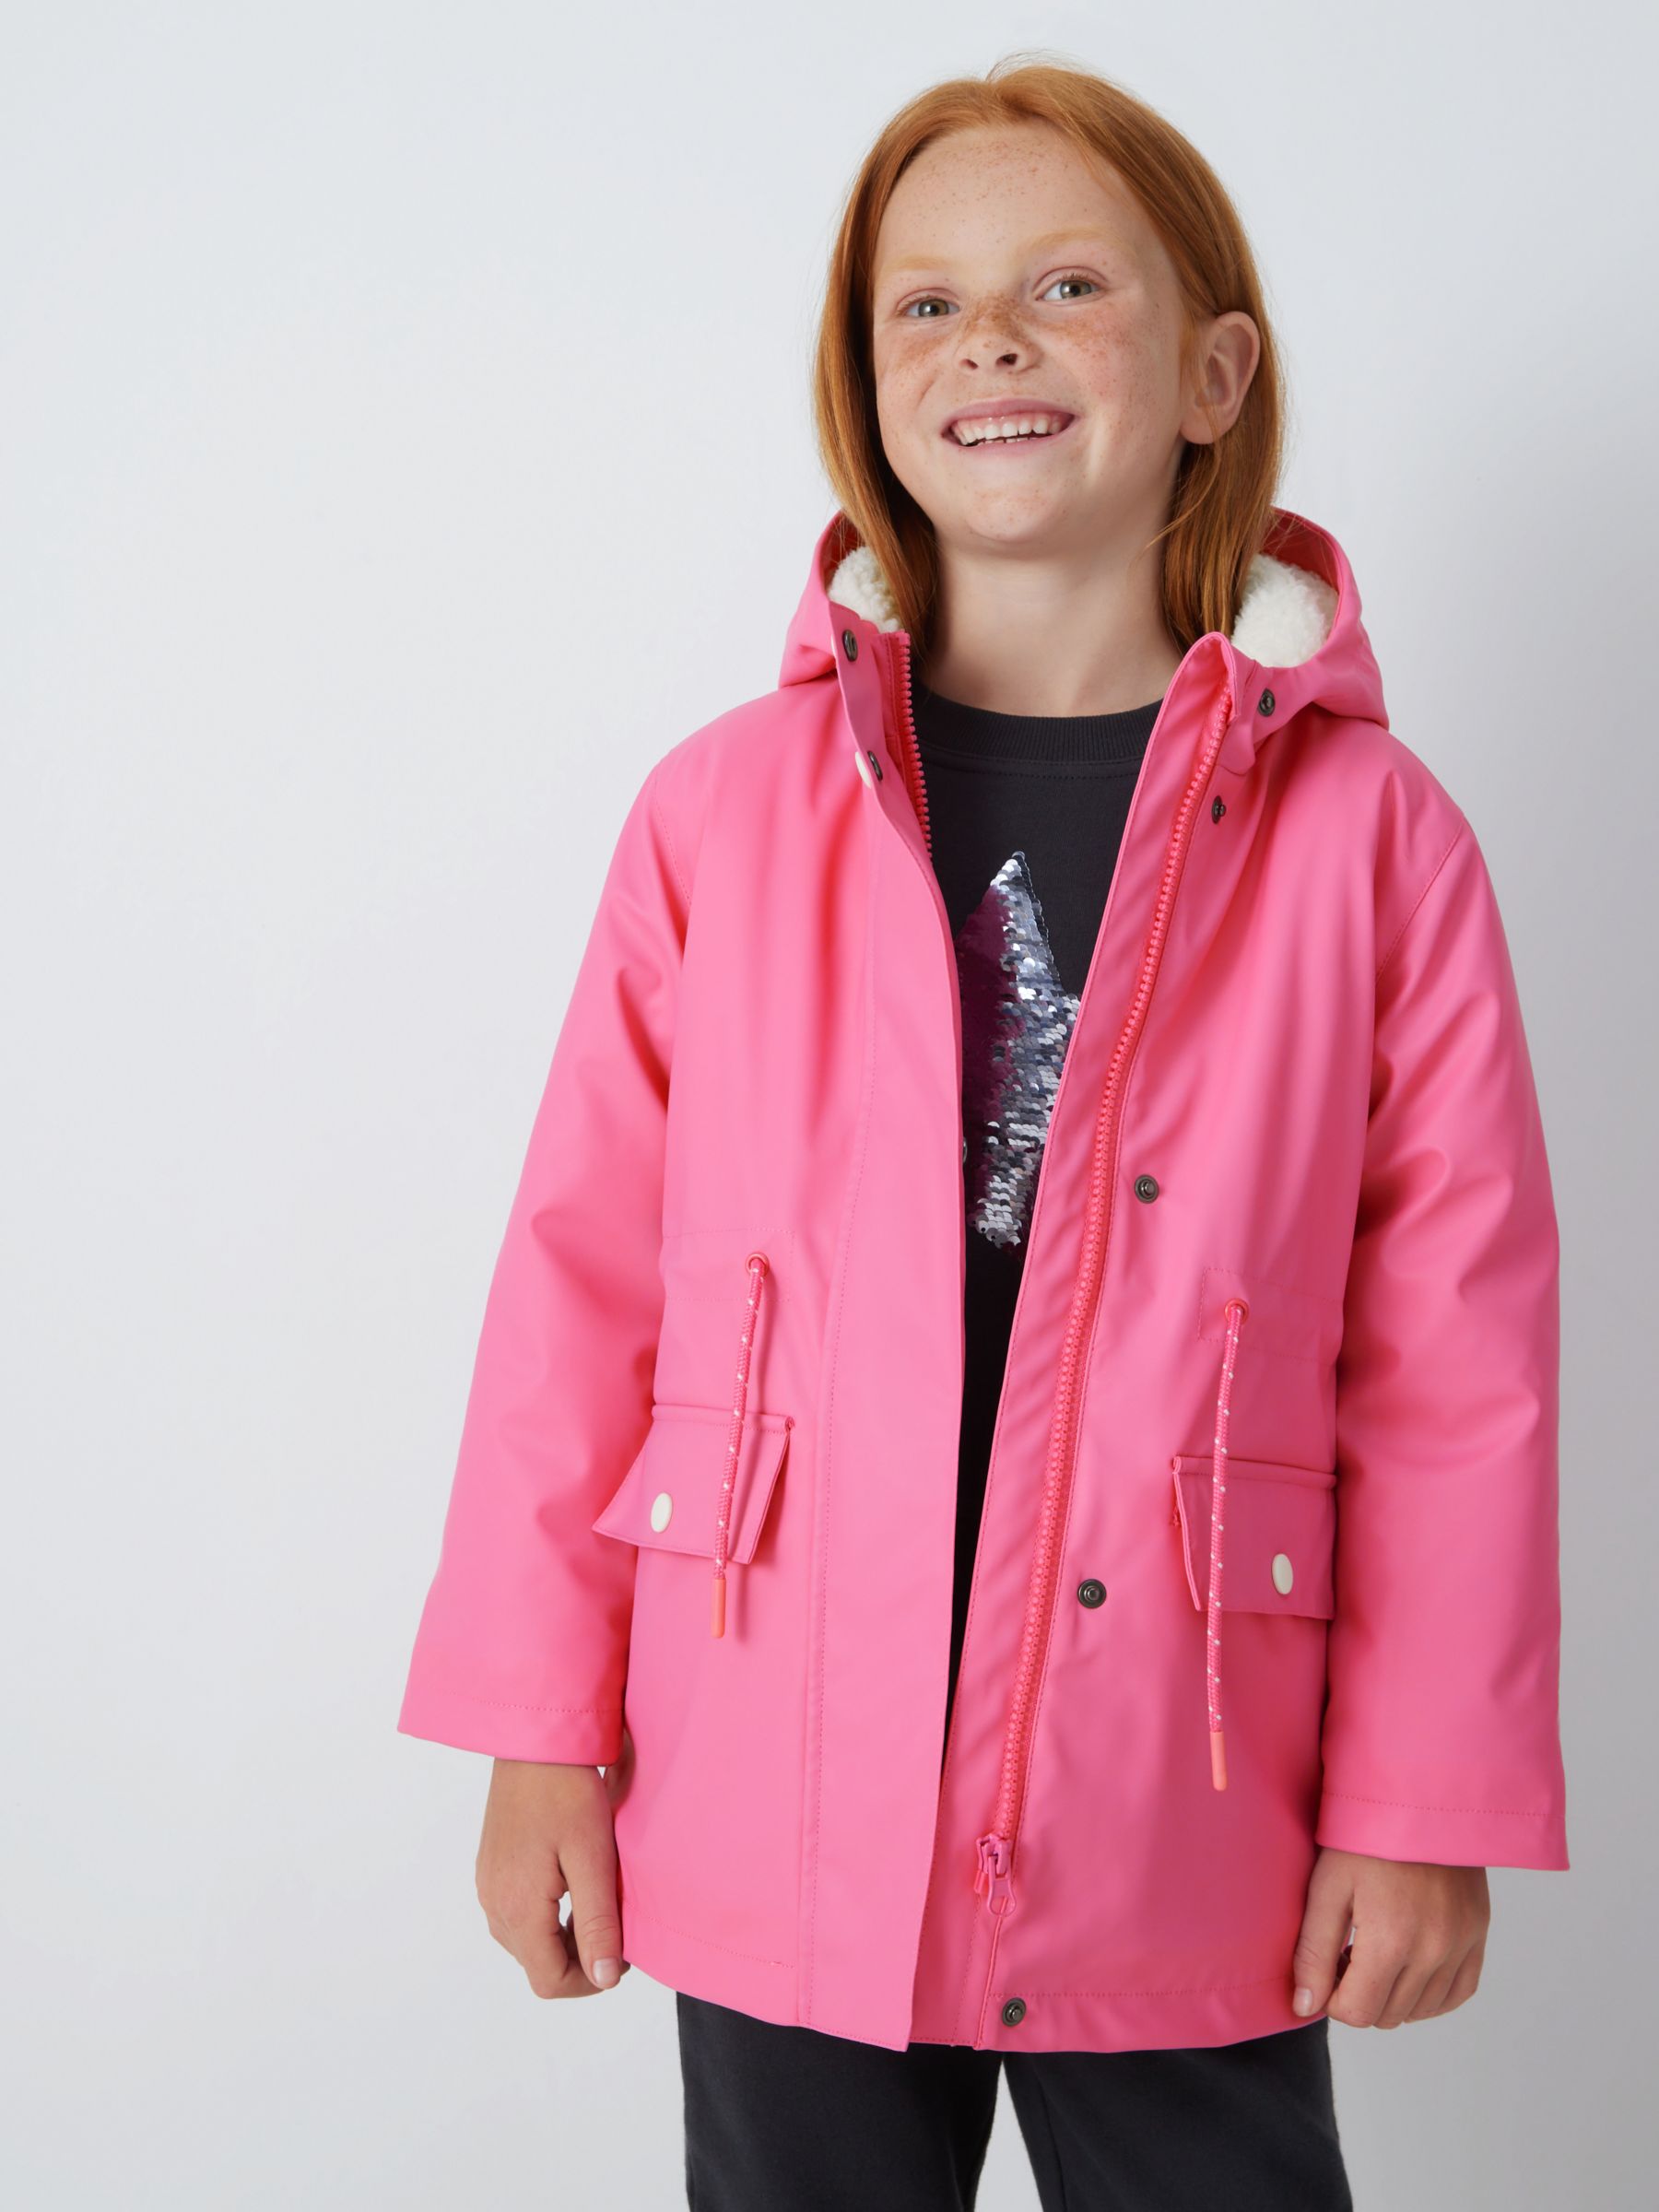 John Lewis Kids' Plain Hooded Rain Coat, Hot Pink at John Lewis & Partners